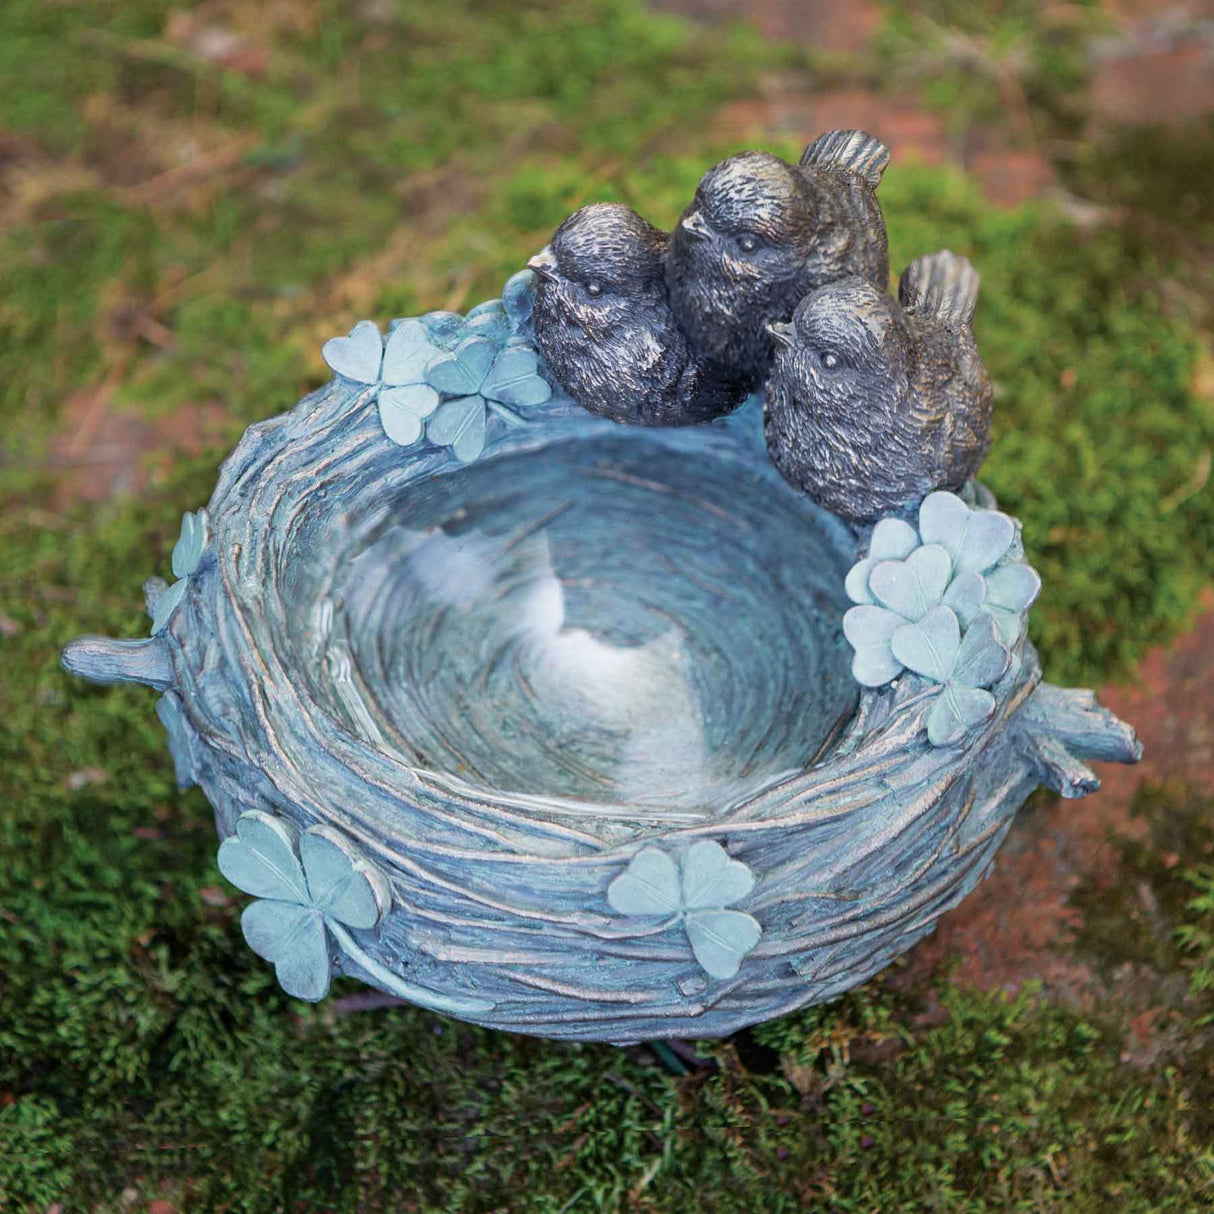 Birdbath Nest with Shamrocks - Creative Irish Gifts